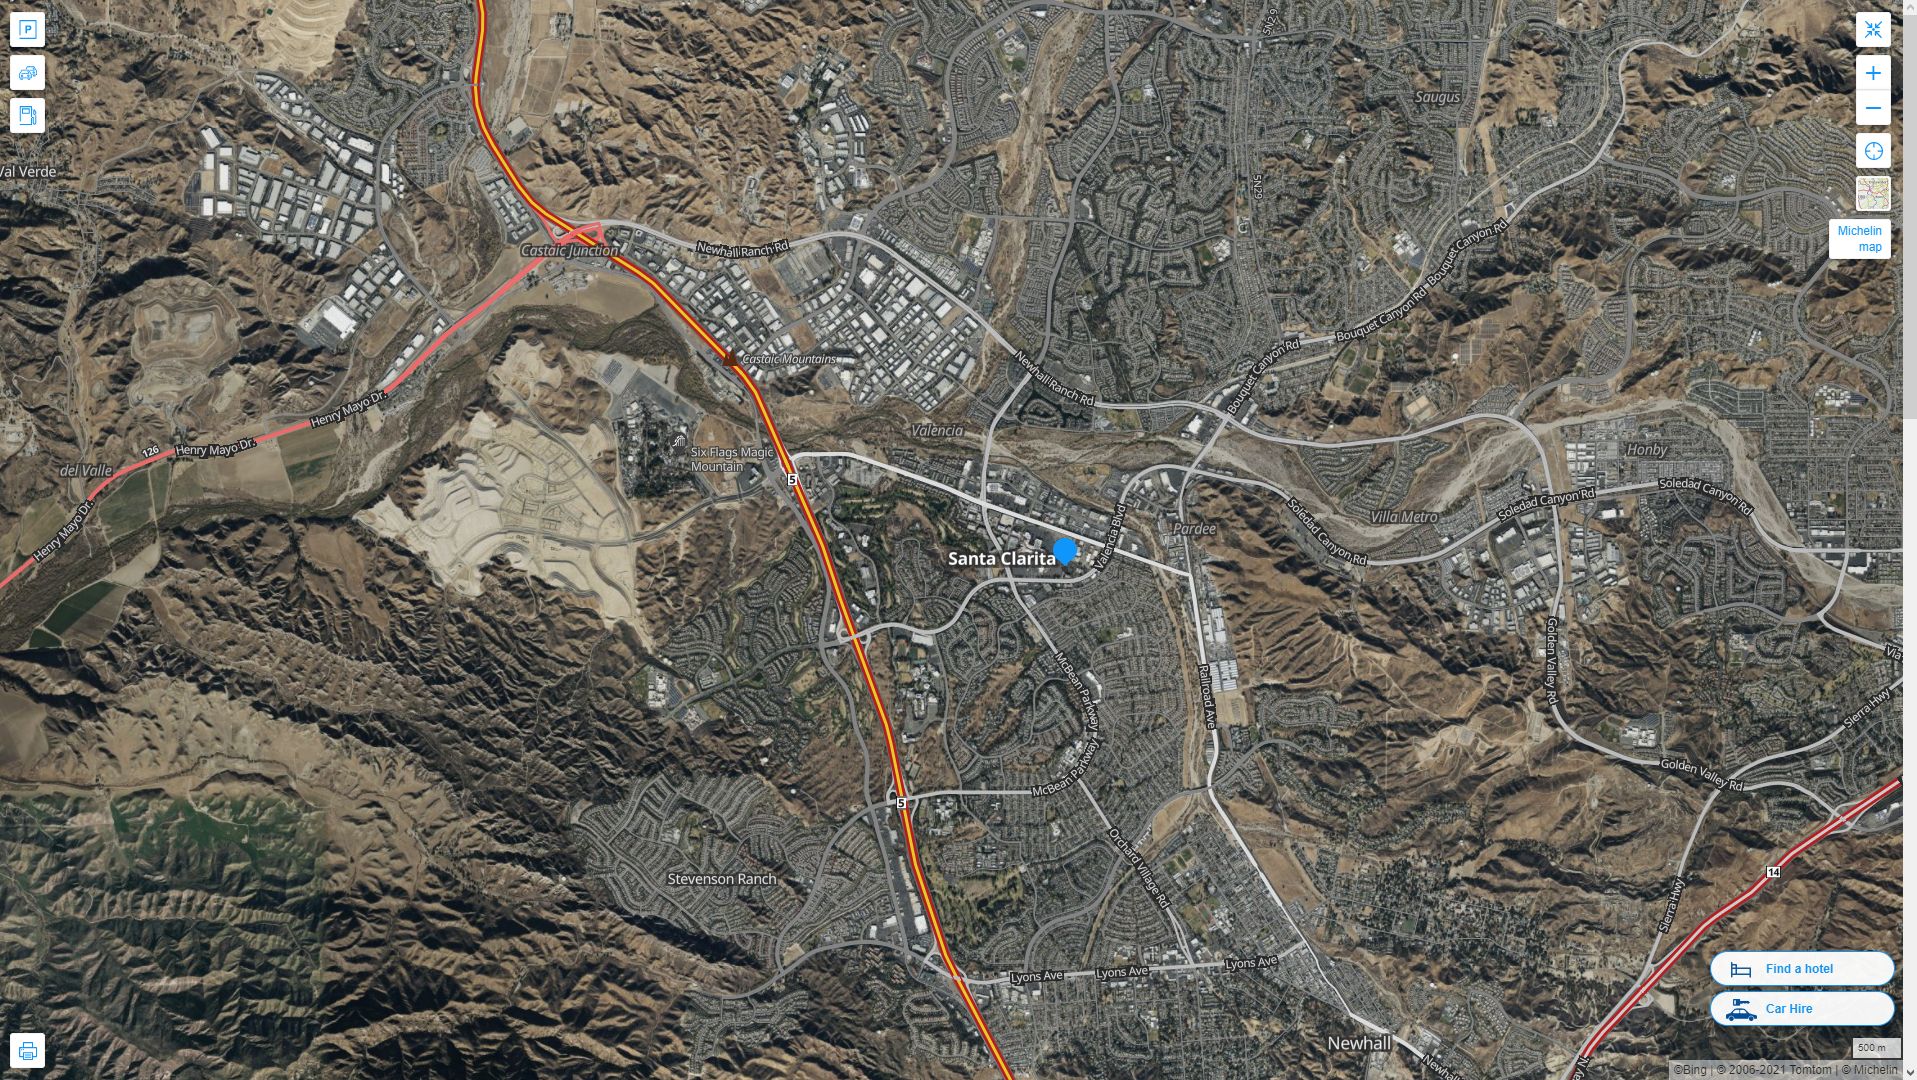 Santa Clarita California Highway and Road Map with Satellite View